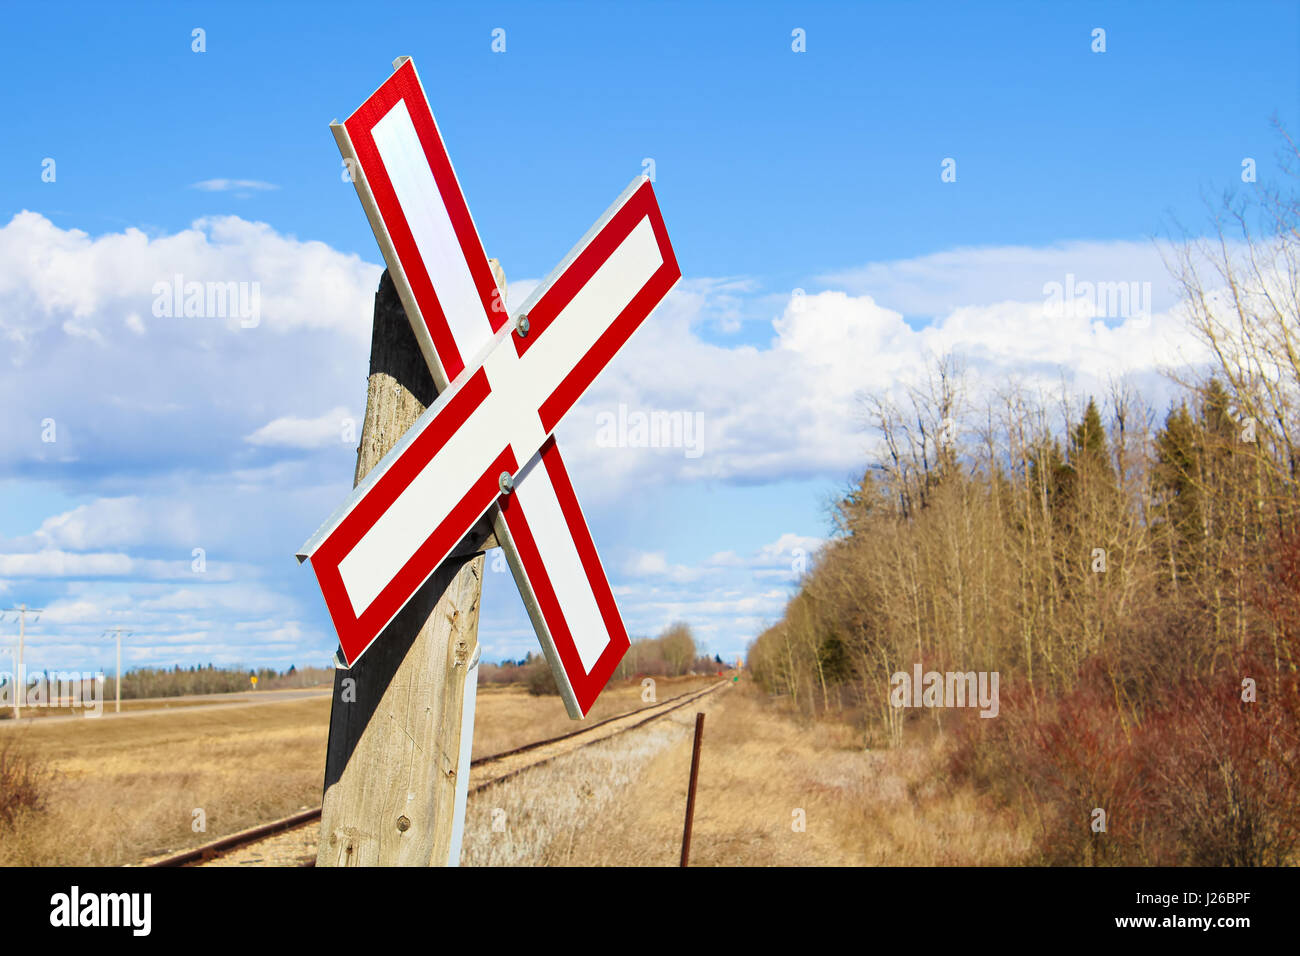 Railroad crossing sign along gravel road. Stock Photo